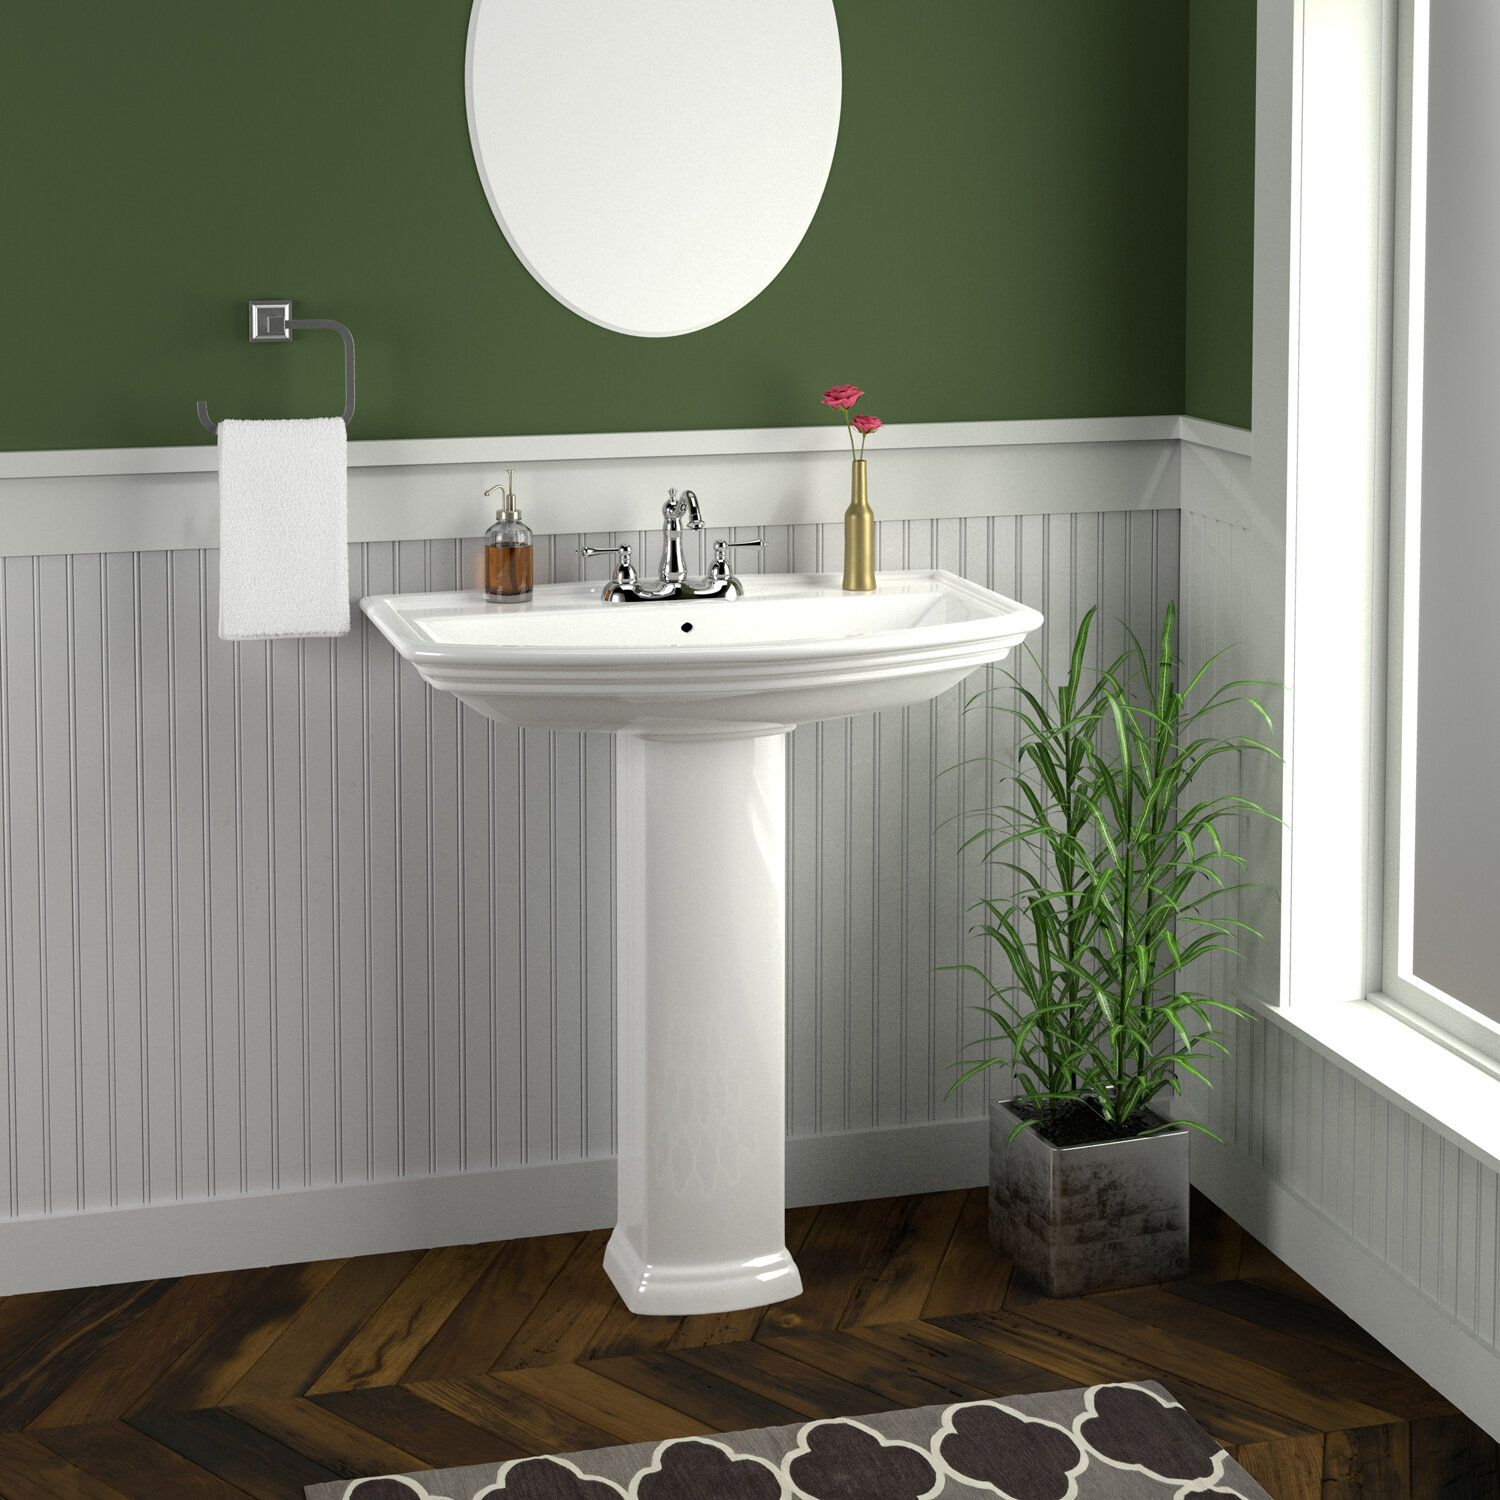 Barclay 2738 Tall White Vitreous China Rectangular Pedestal Bathroom Sink With Overflow Reviews Wayfair